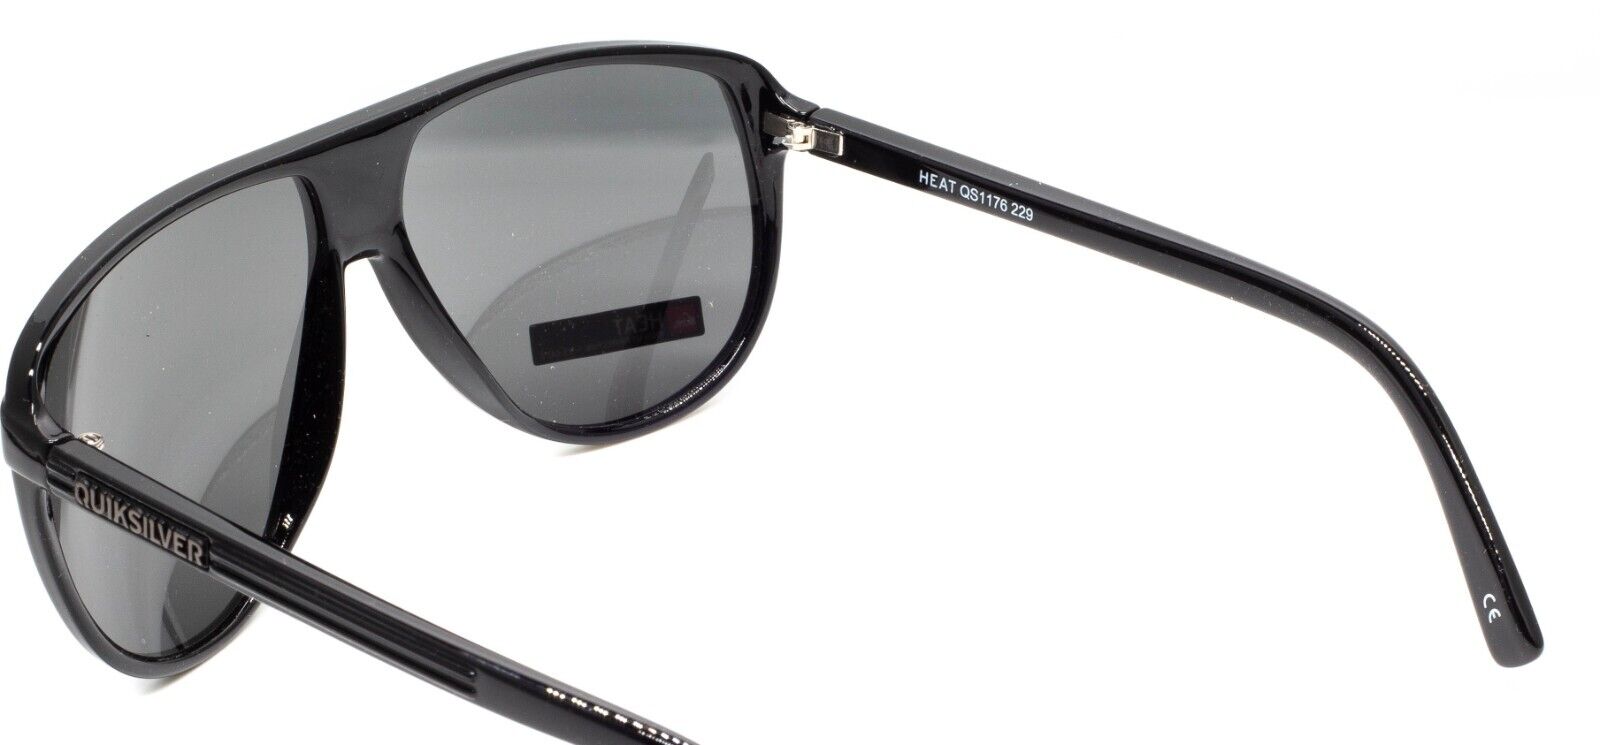 Sunglasses 229 Glasses -Italy 4231441 QS1176 GGV Shades Eyewear HEAT Eyewear - QUIKSILVER 59mm